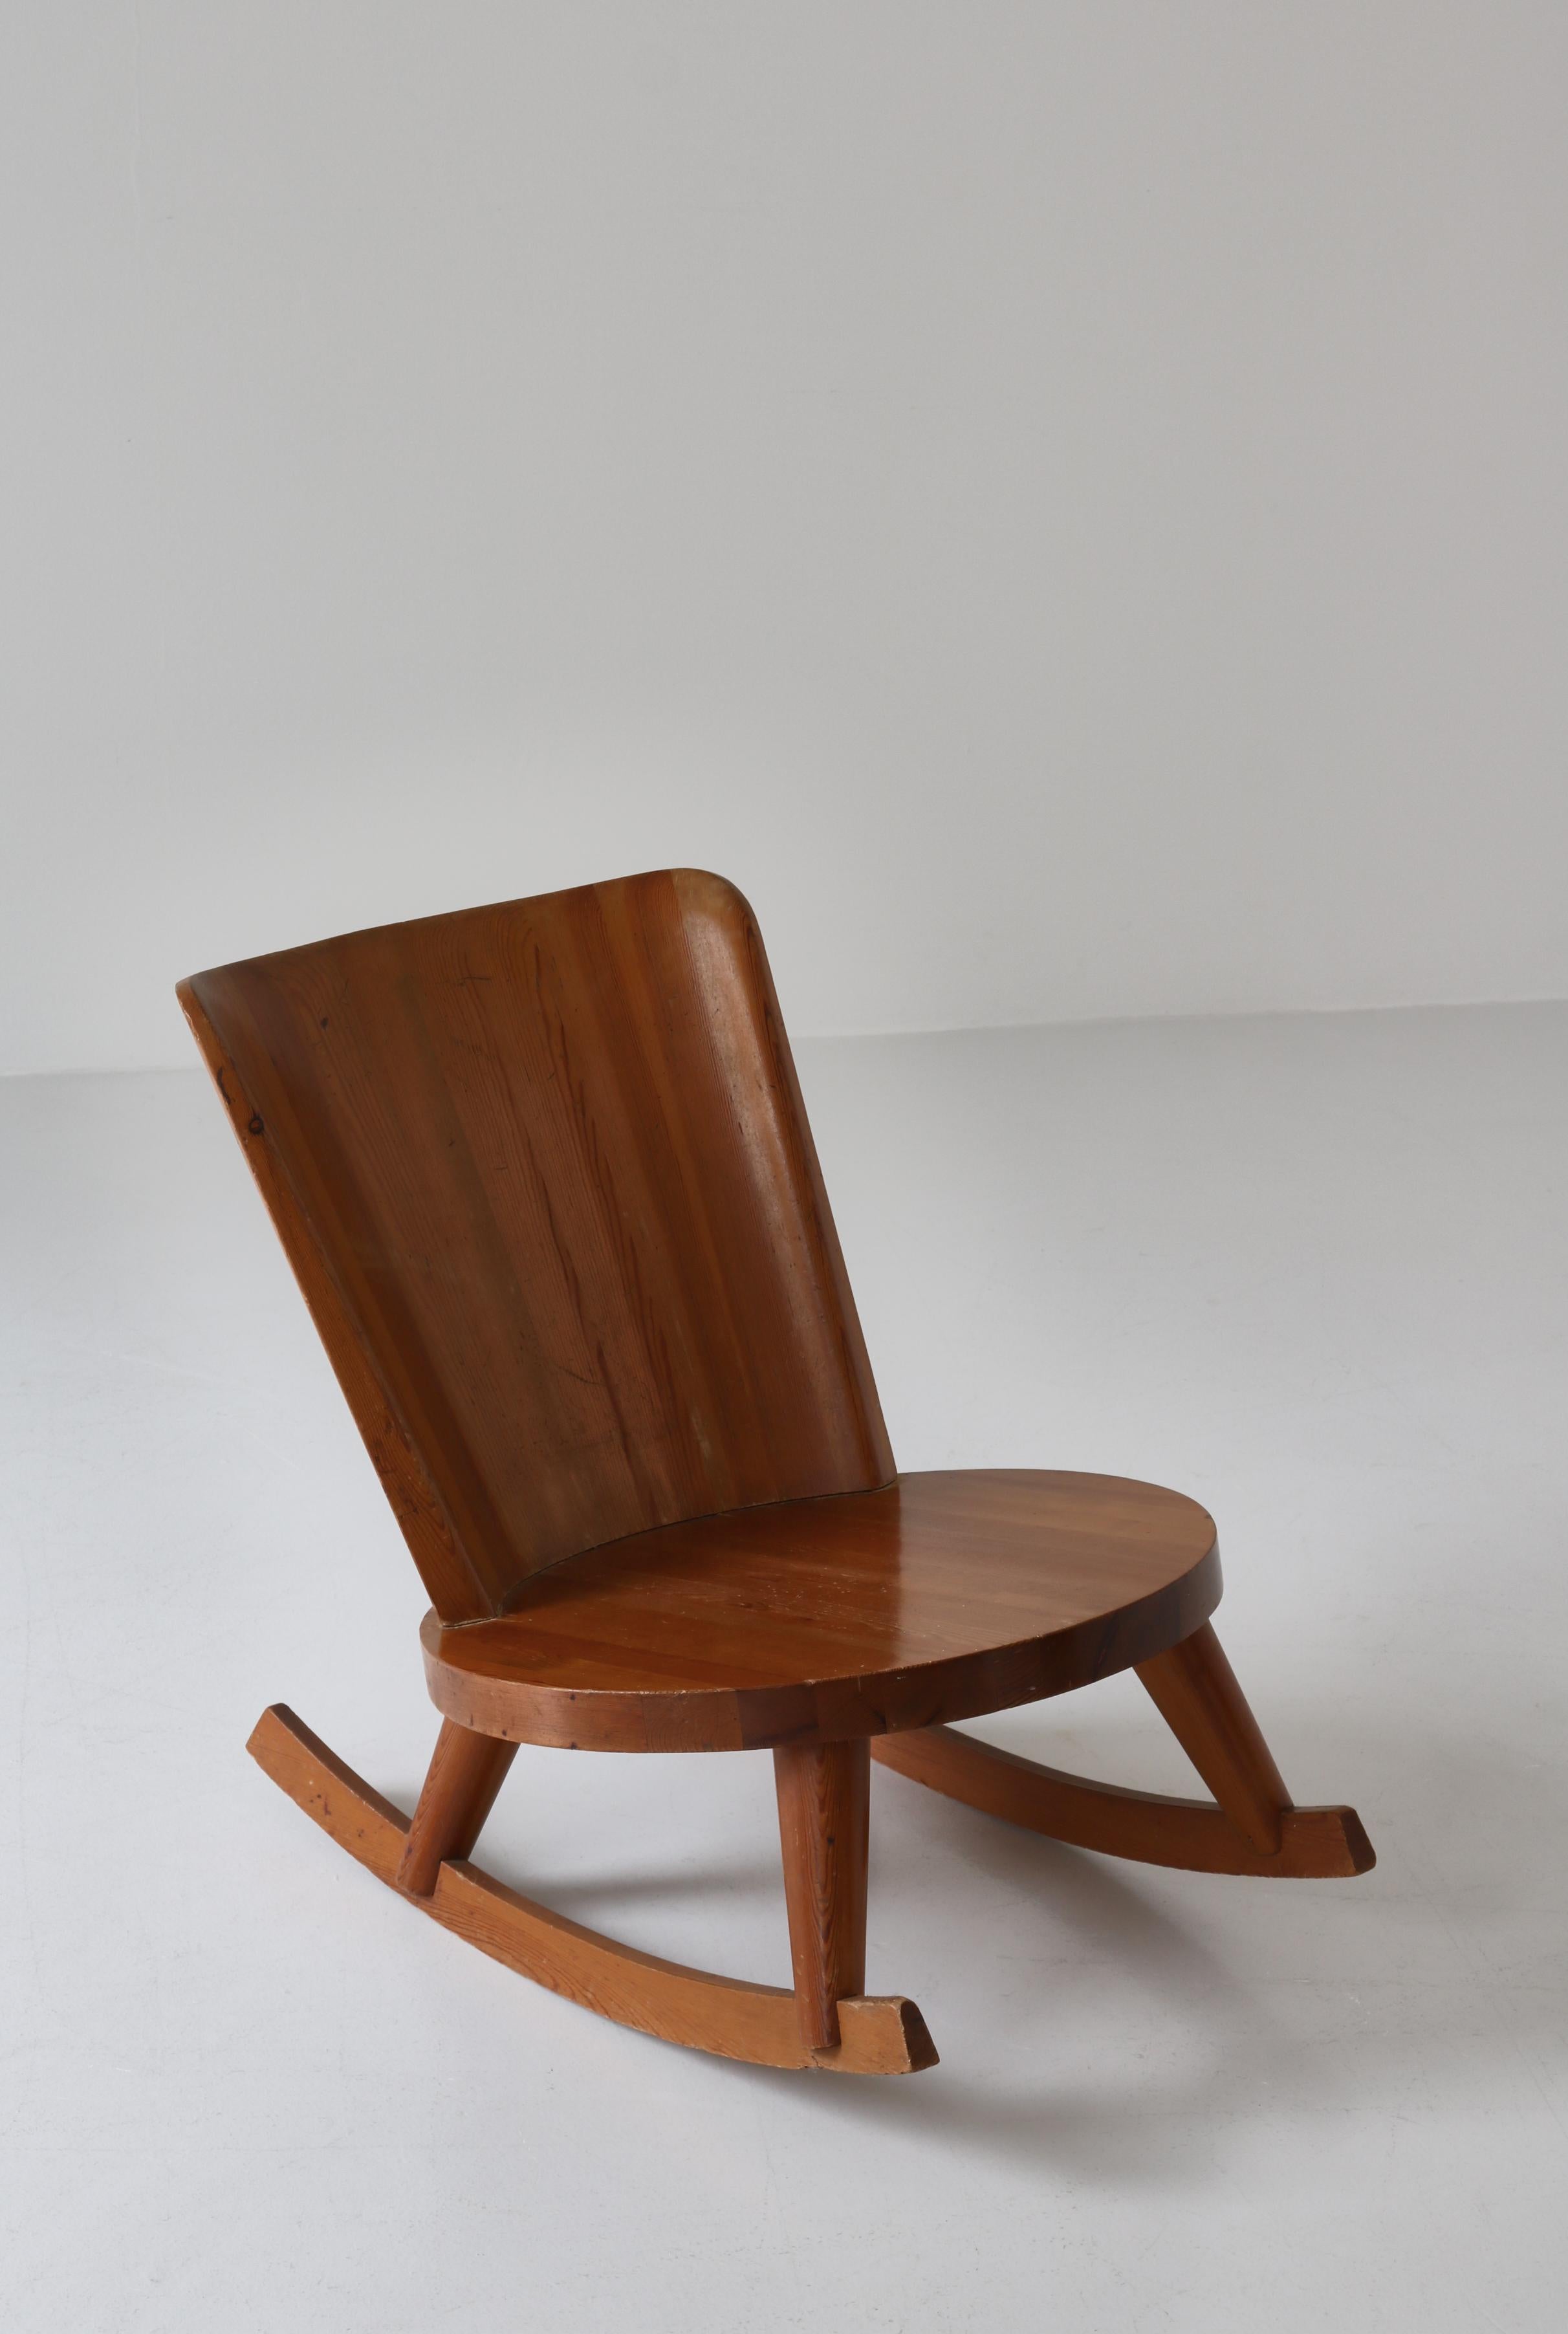 Rocking Chair in Pine by Torsten Claeson for Svensk Fur, Swedish Modern, 1930s For Sale 6